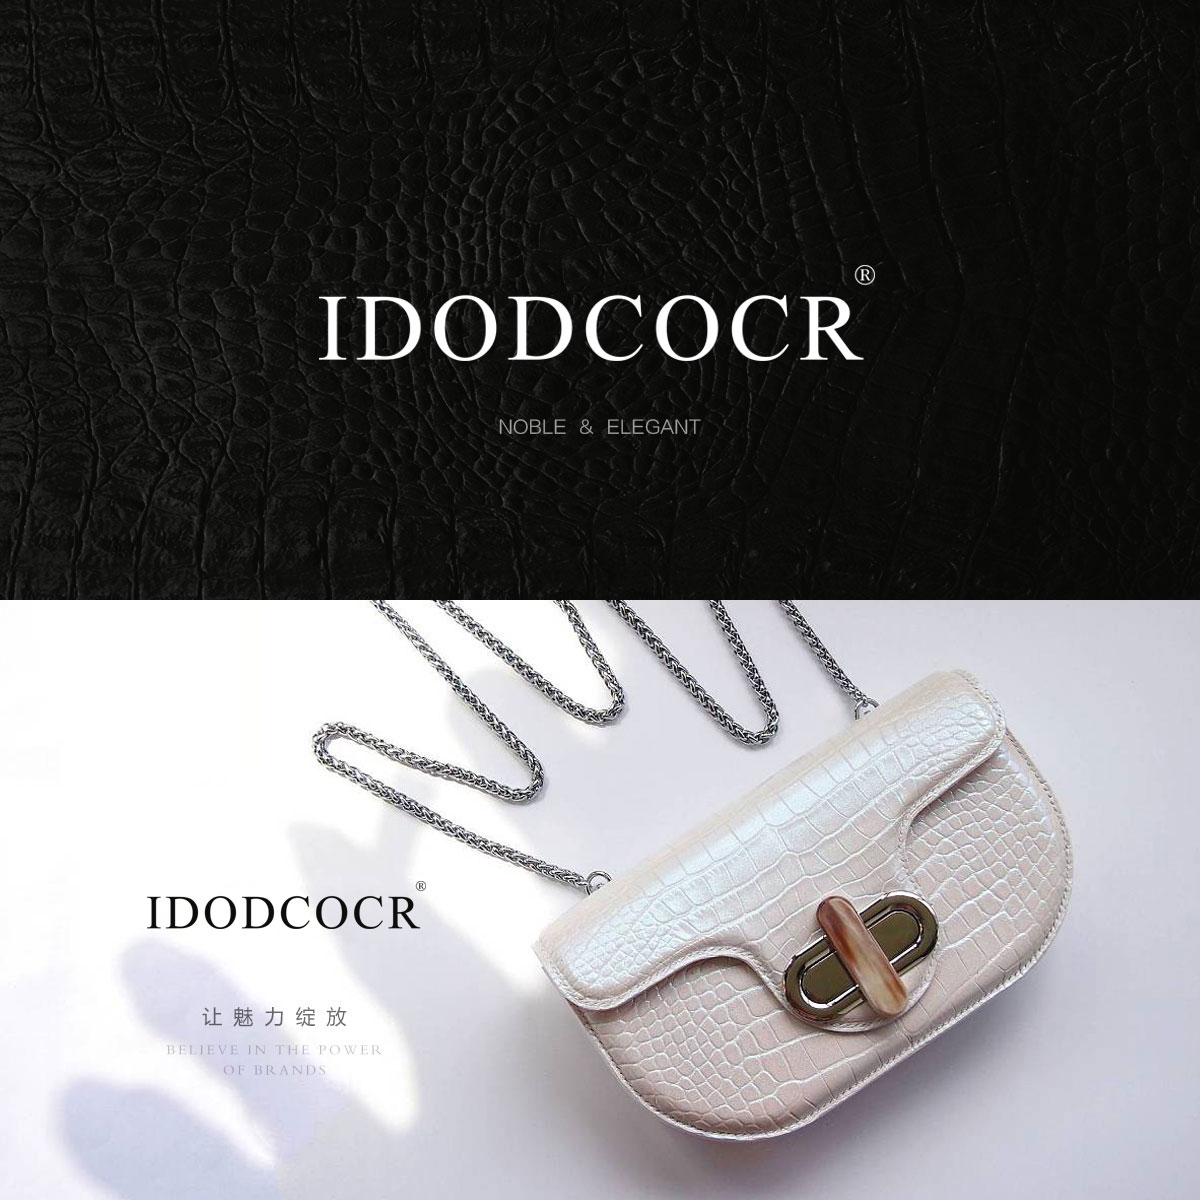 IDODCOCR